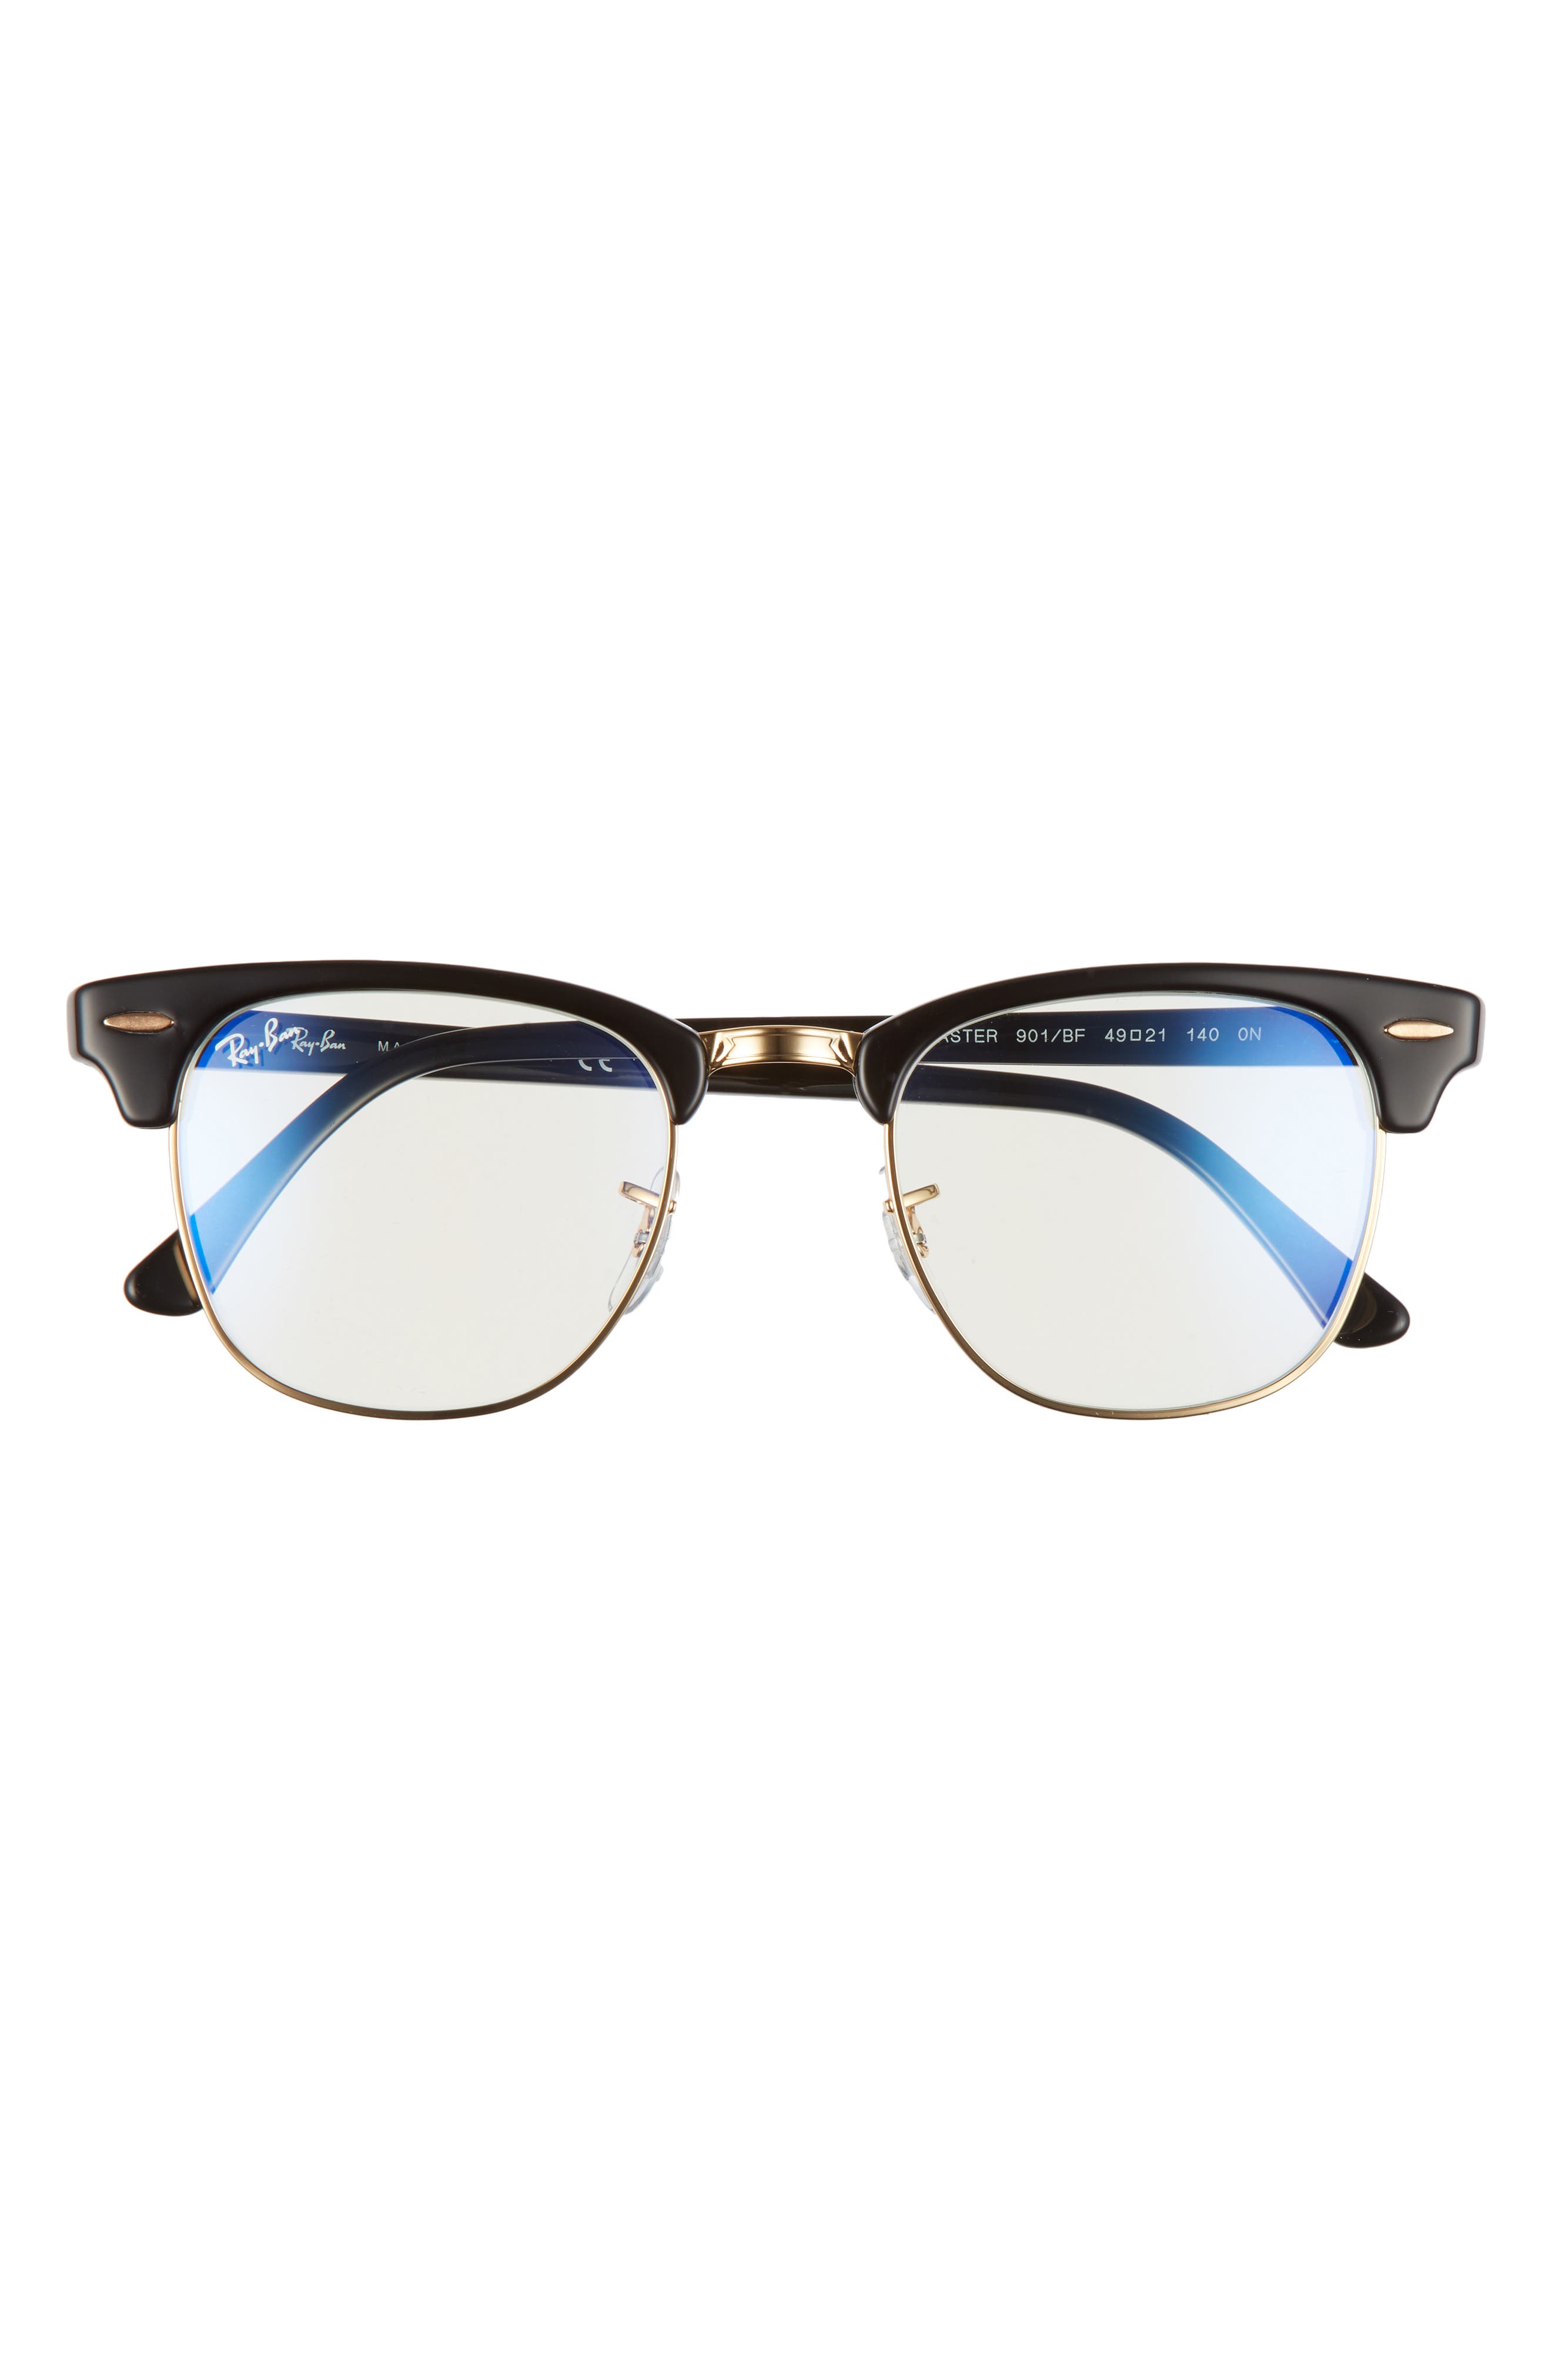 clubmaster blue light glasses